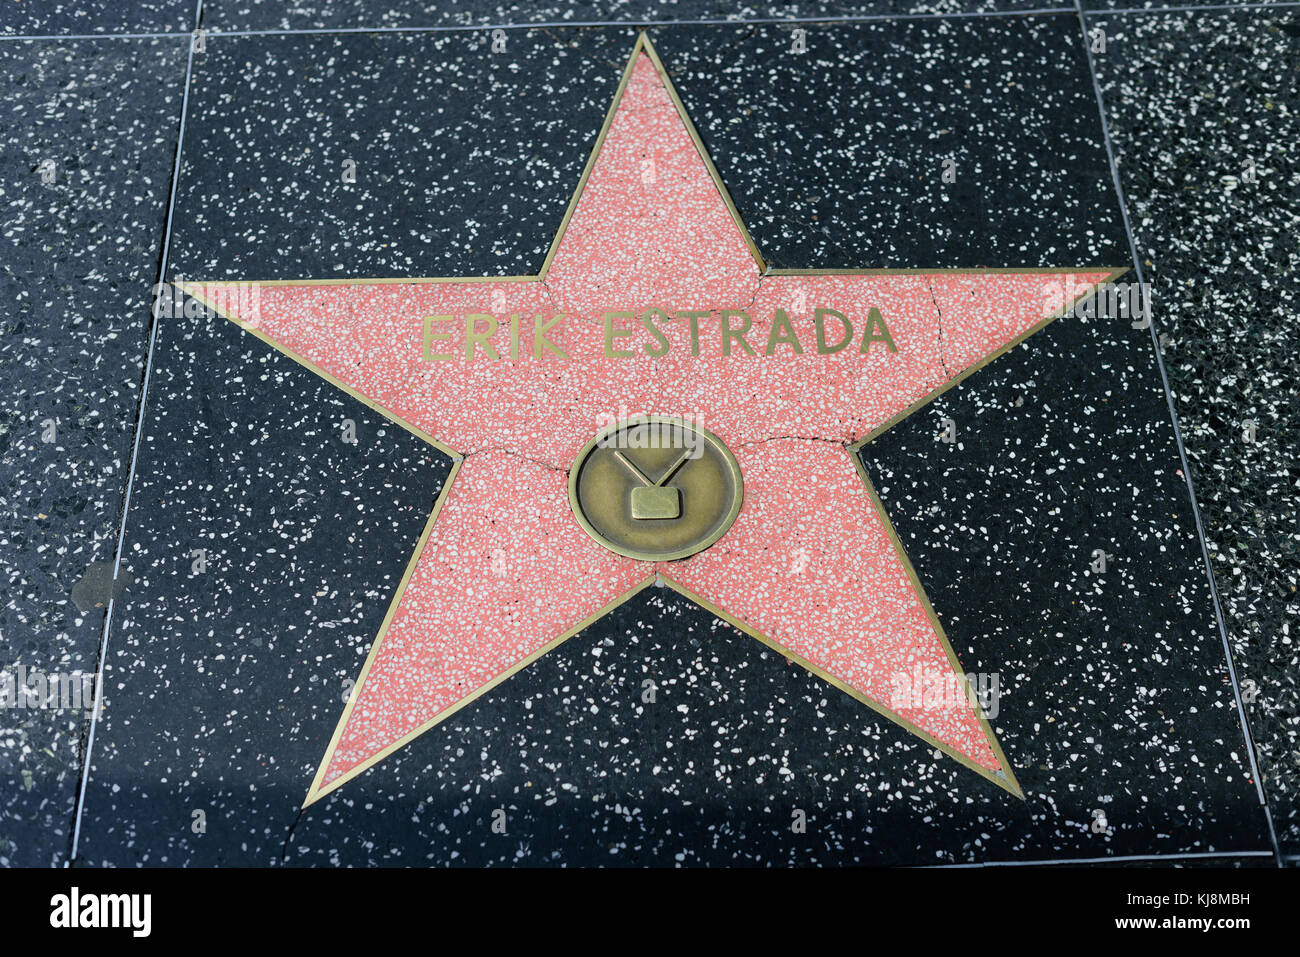 HOLLYWOOD, CA - DECEMBER 06: Erik Estrada star on the Hollywood Walk of Fame in Hollywood, California on Dec. 6, 2016. Stock Photo